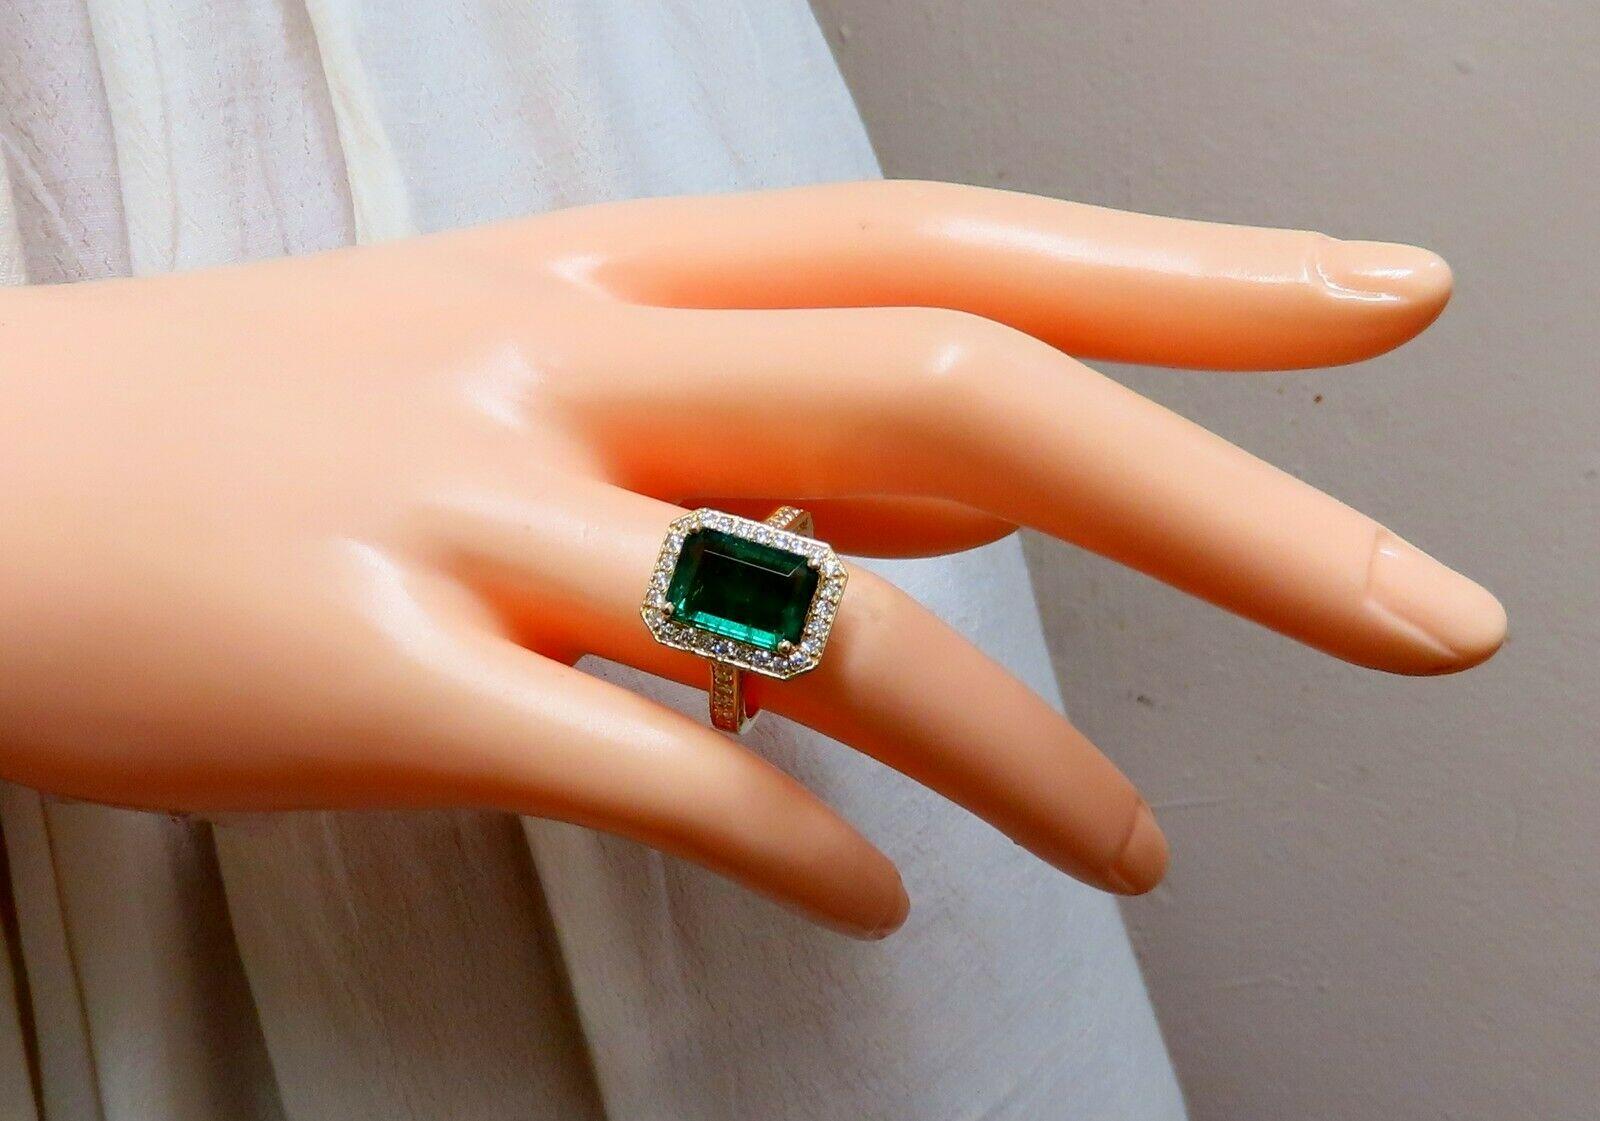 Rectangular Deck Gilt Mod Deco Green.

4.10ct. Natural Emerald cut, Emerald Ring

Emerald: 11.6 x 8.2mm 

Transparent & Vivid Green 

1.30ct. Diamonds.

Round & full cuts 

G-color Vs-2 clarity.  

14kt. yellow gold

5.9 grams

Ring Current size: